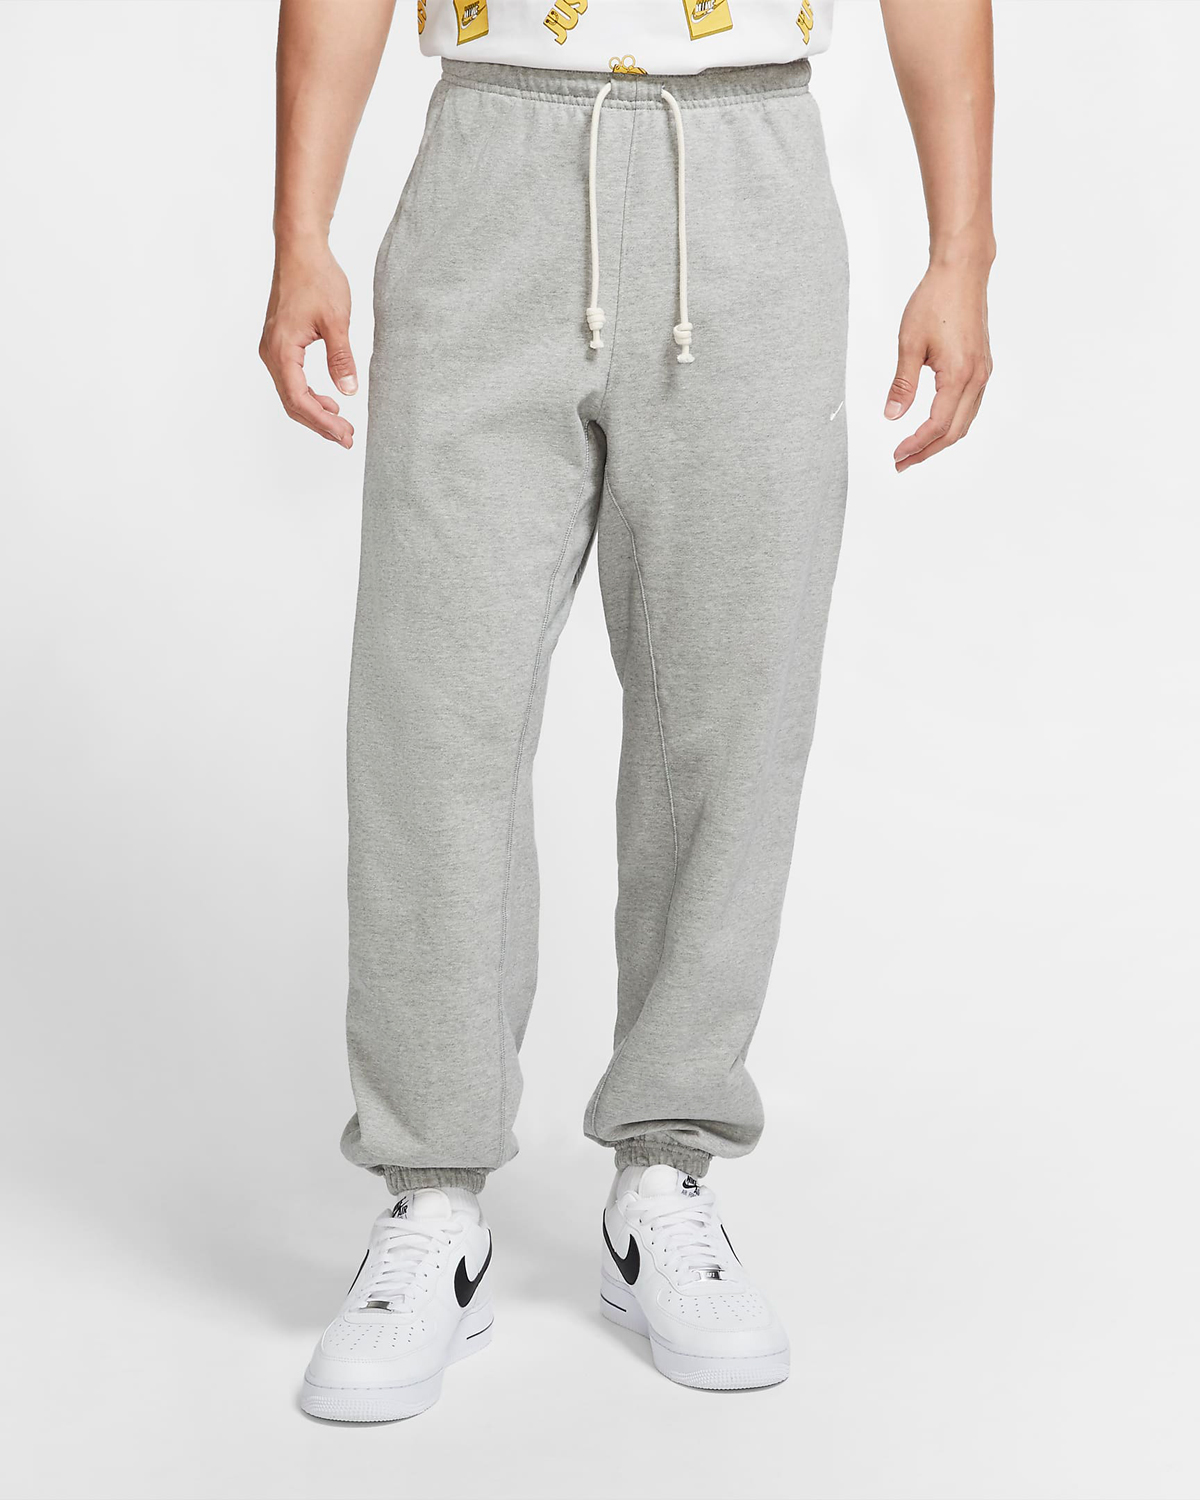 Nike-Standard-Issue-Pants-Grey